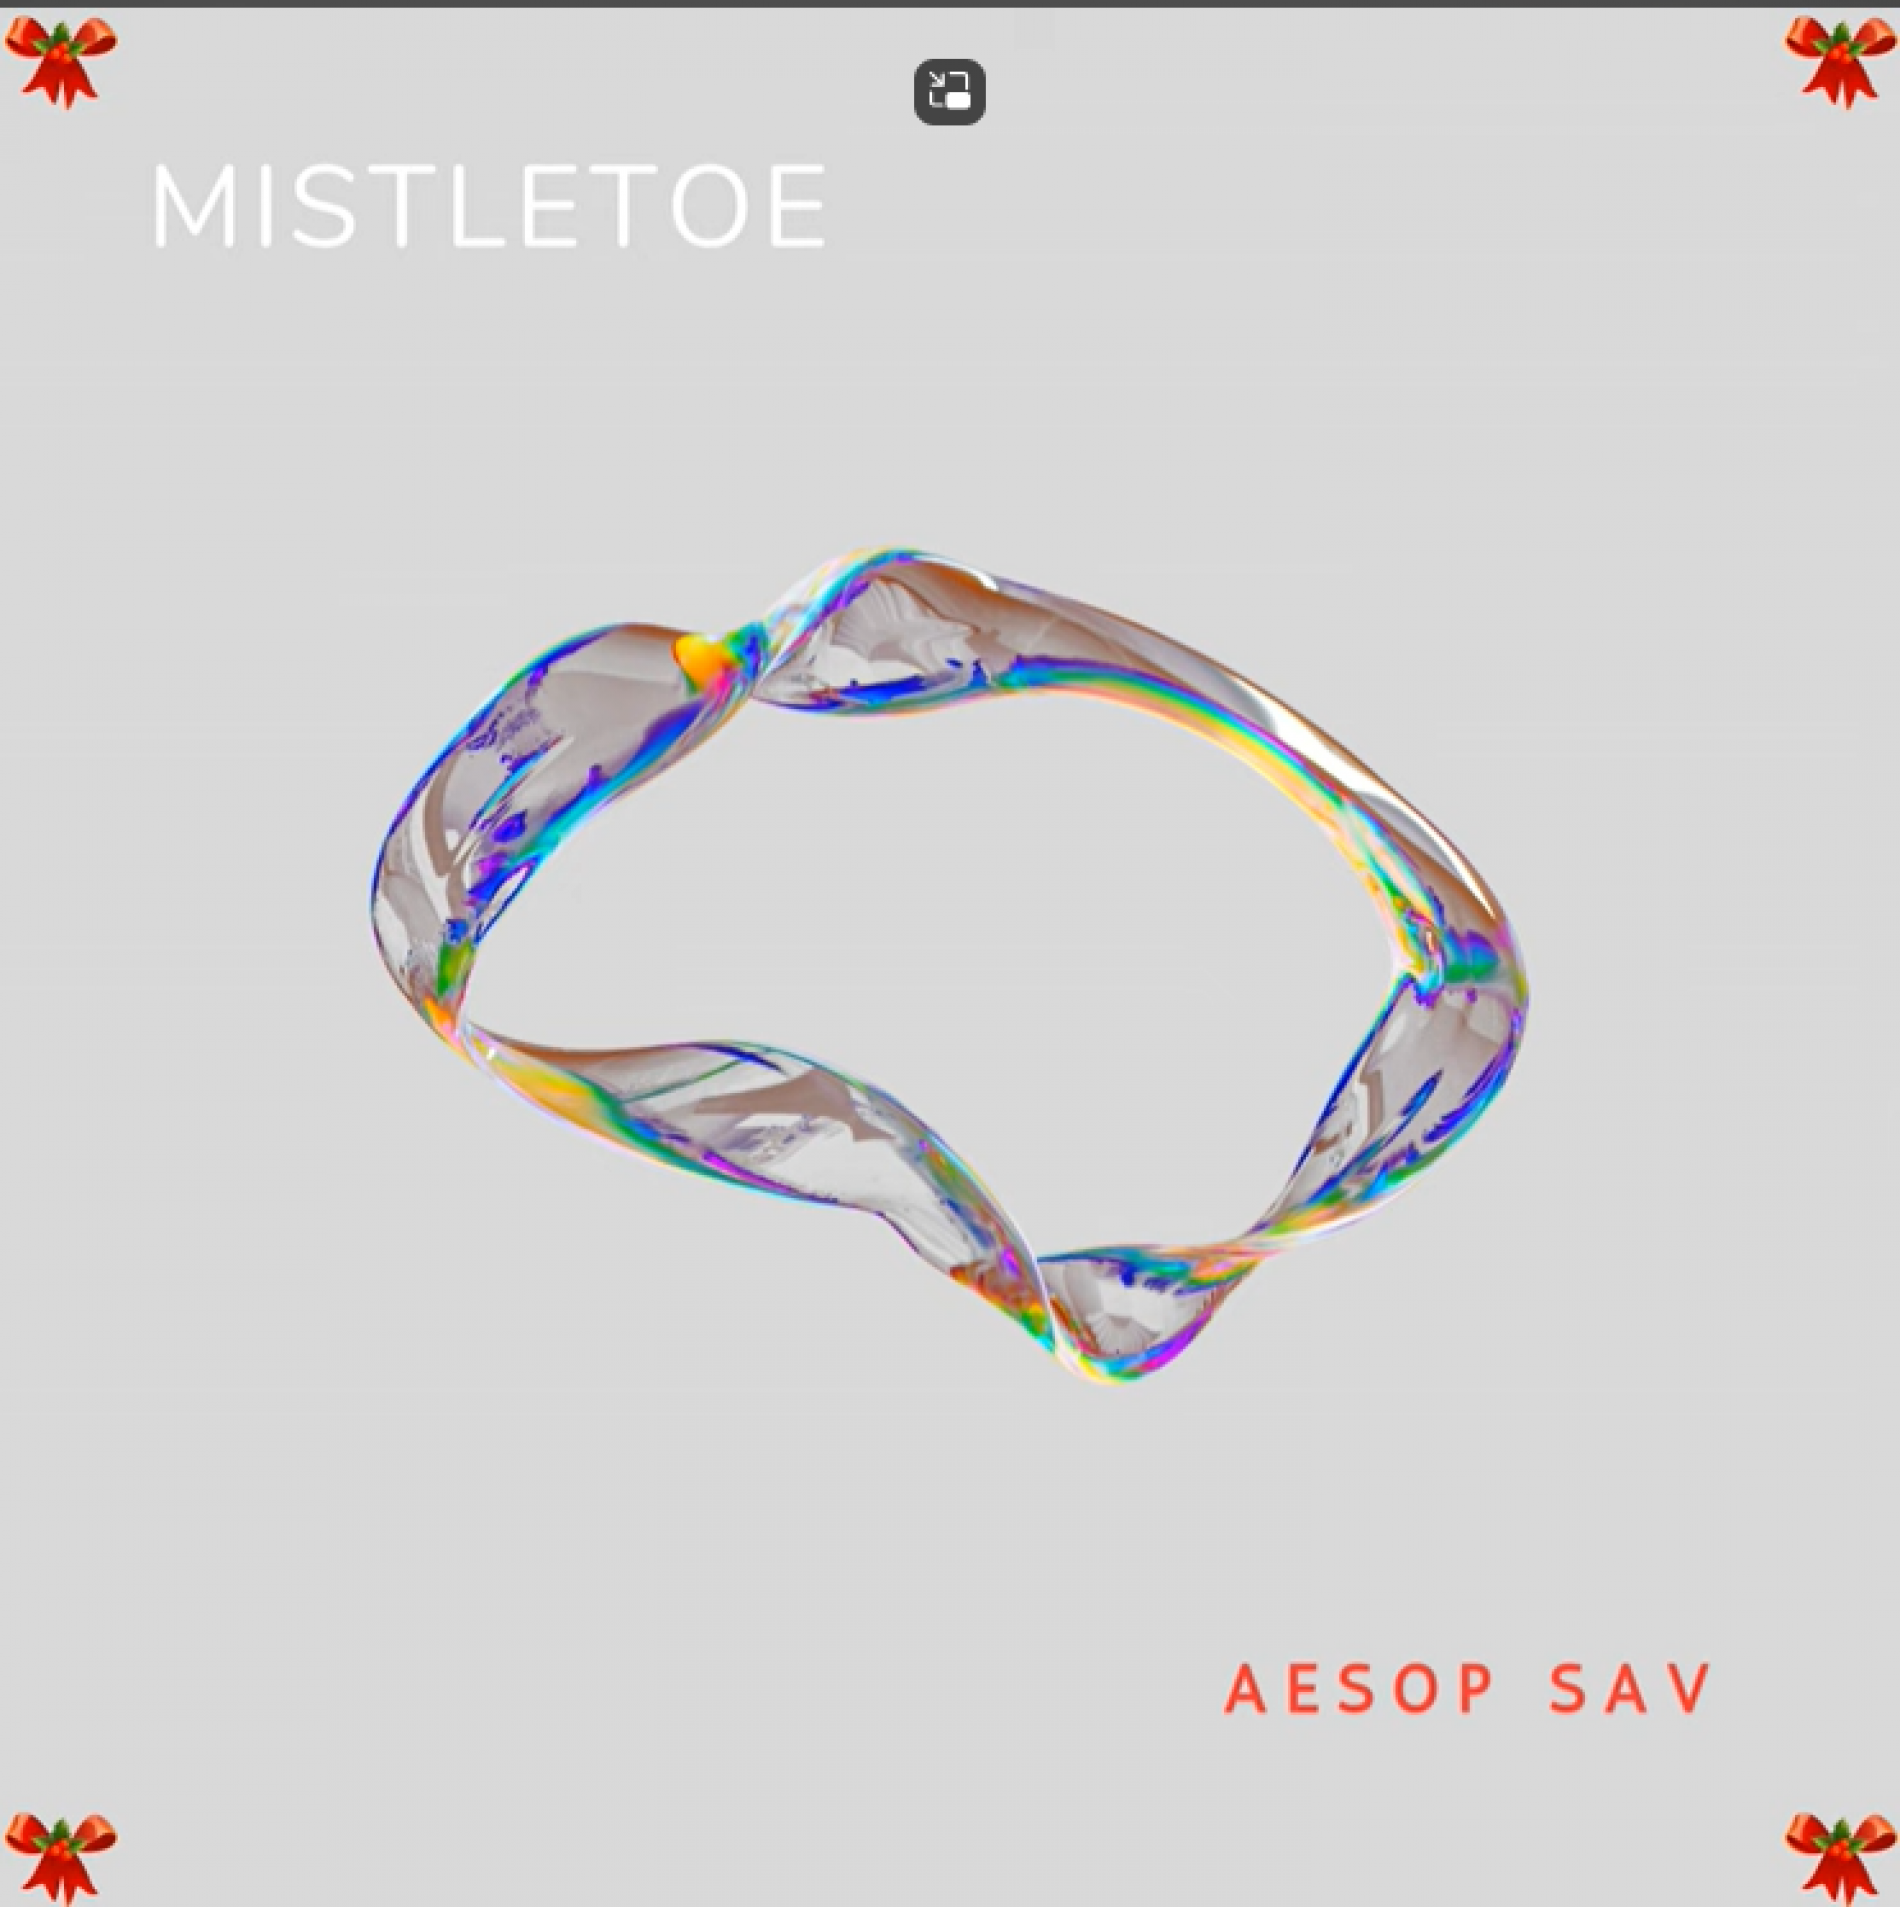 New Music : Aesop Sav – Mistletoe